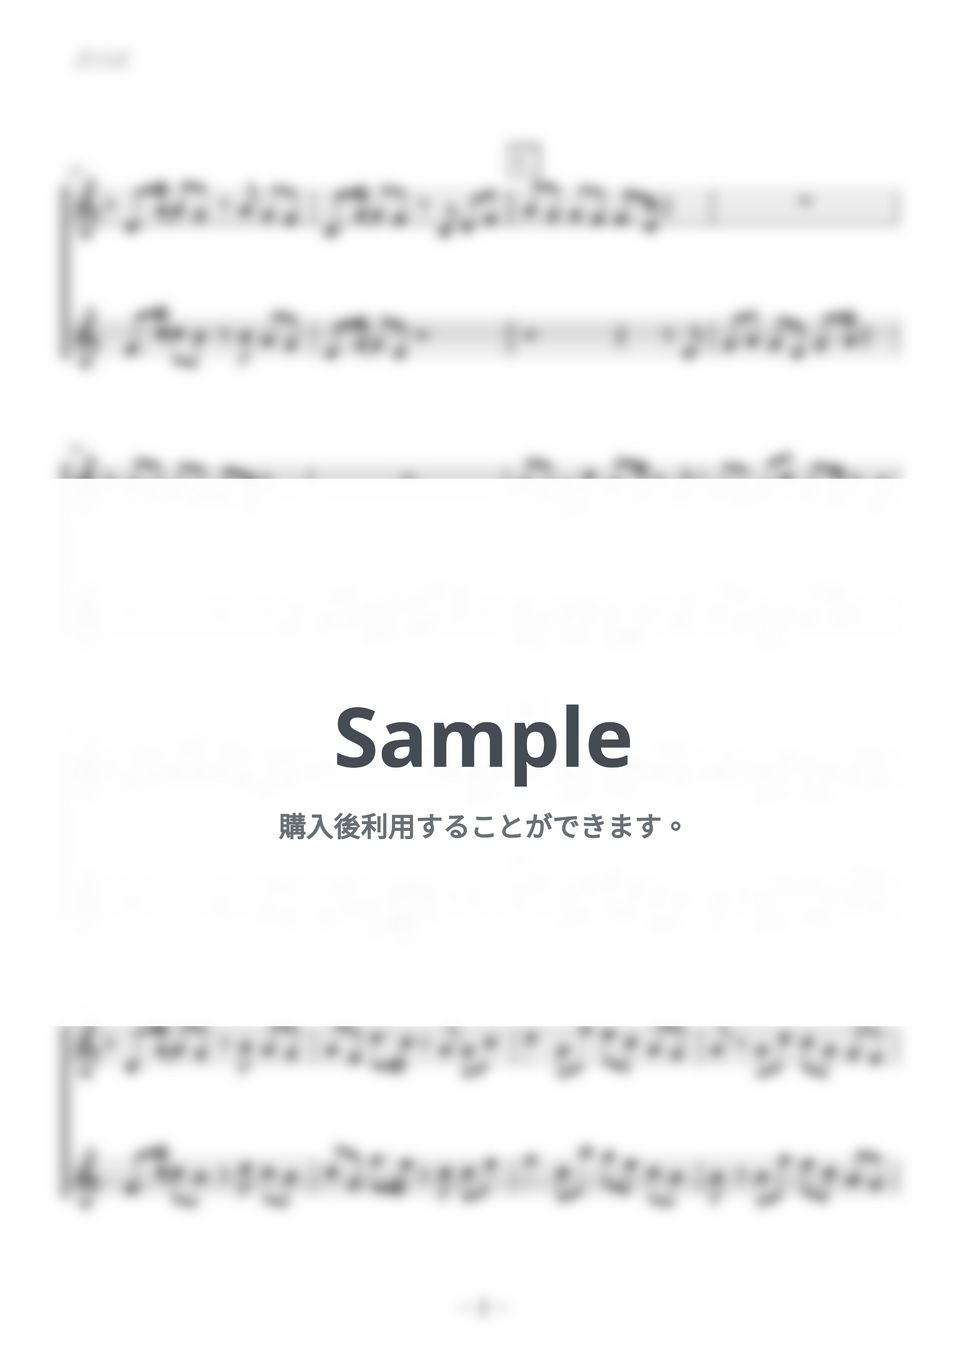 YOASOBI - ツバメ (クラリネットorトランペット・アルトサックス二重奏／無伴奏) by kiminabe